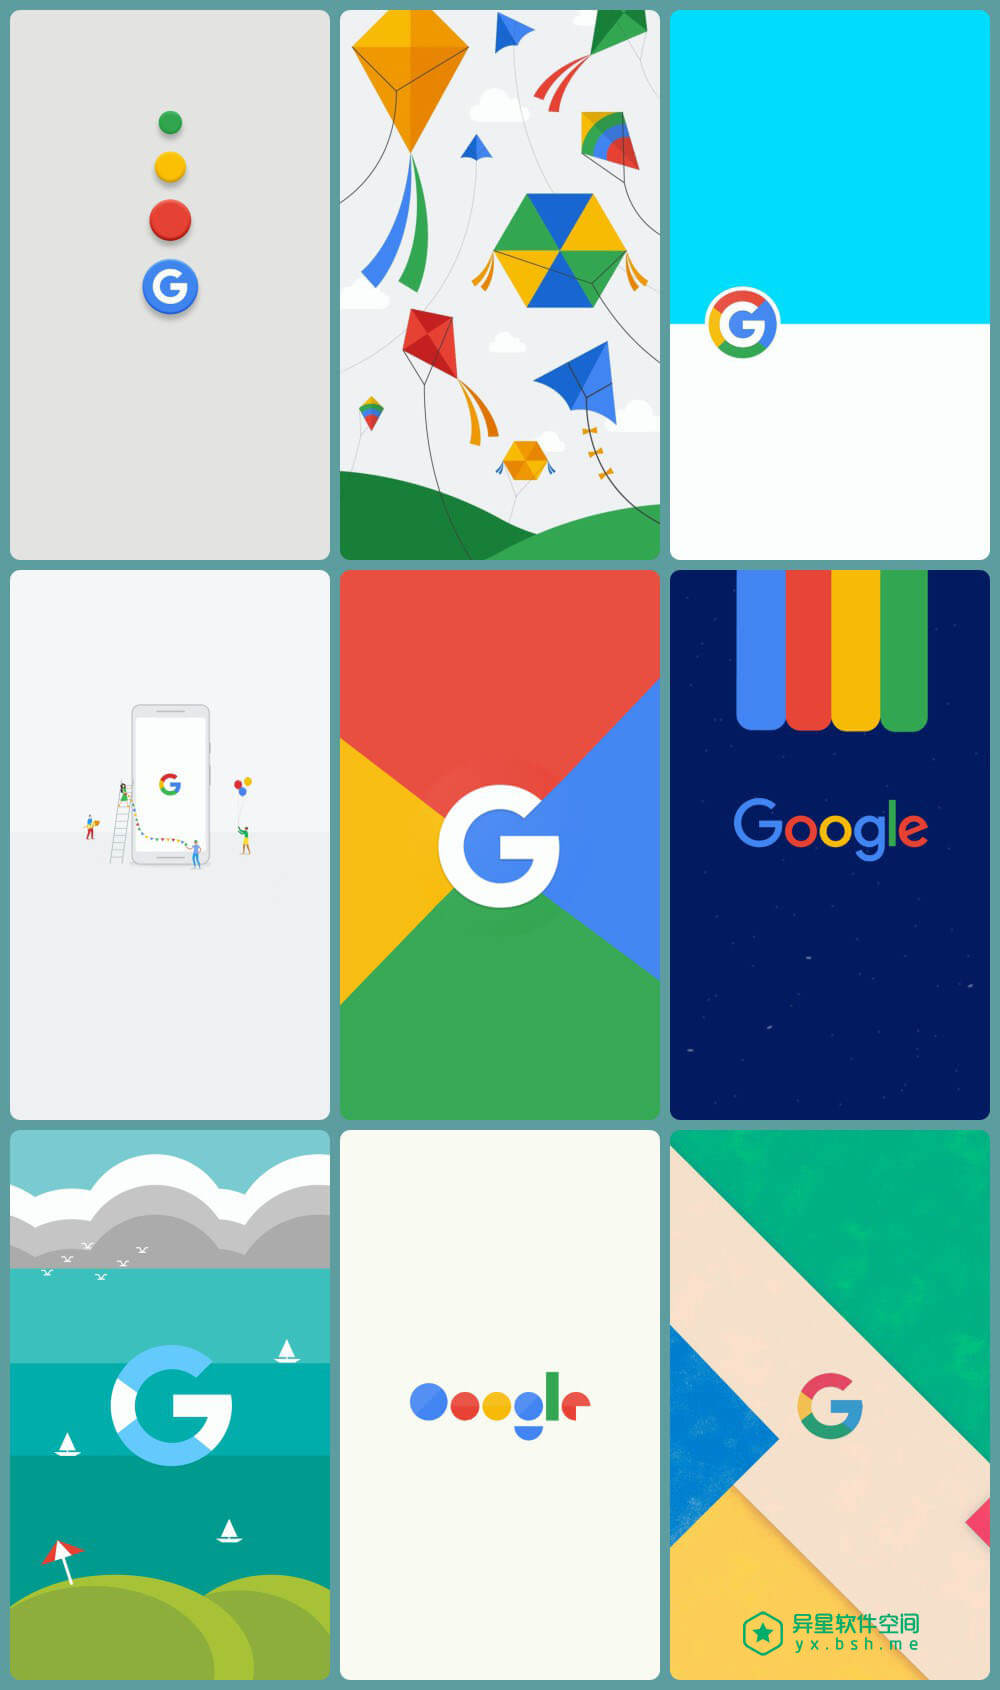 Google 风手机壁纸打包下载 —— 103张谷粉最爱手机壁纸-手机壁纸, 安卓壁纸, 壁纸, google风格, google手机壁纸, google壁纸, google logo壁纸, google